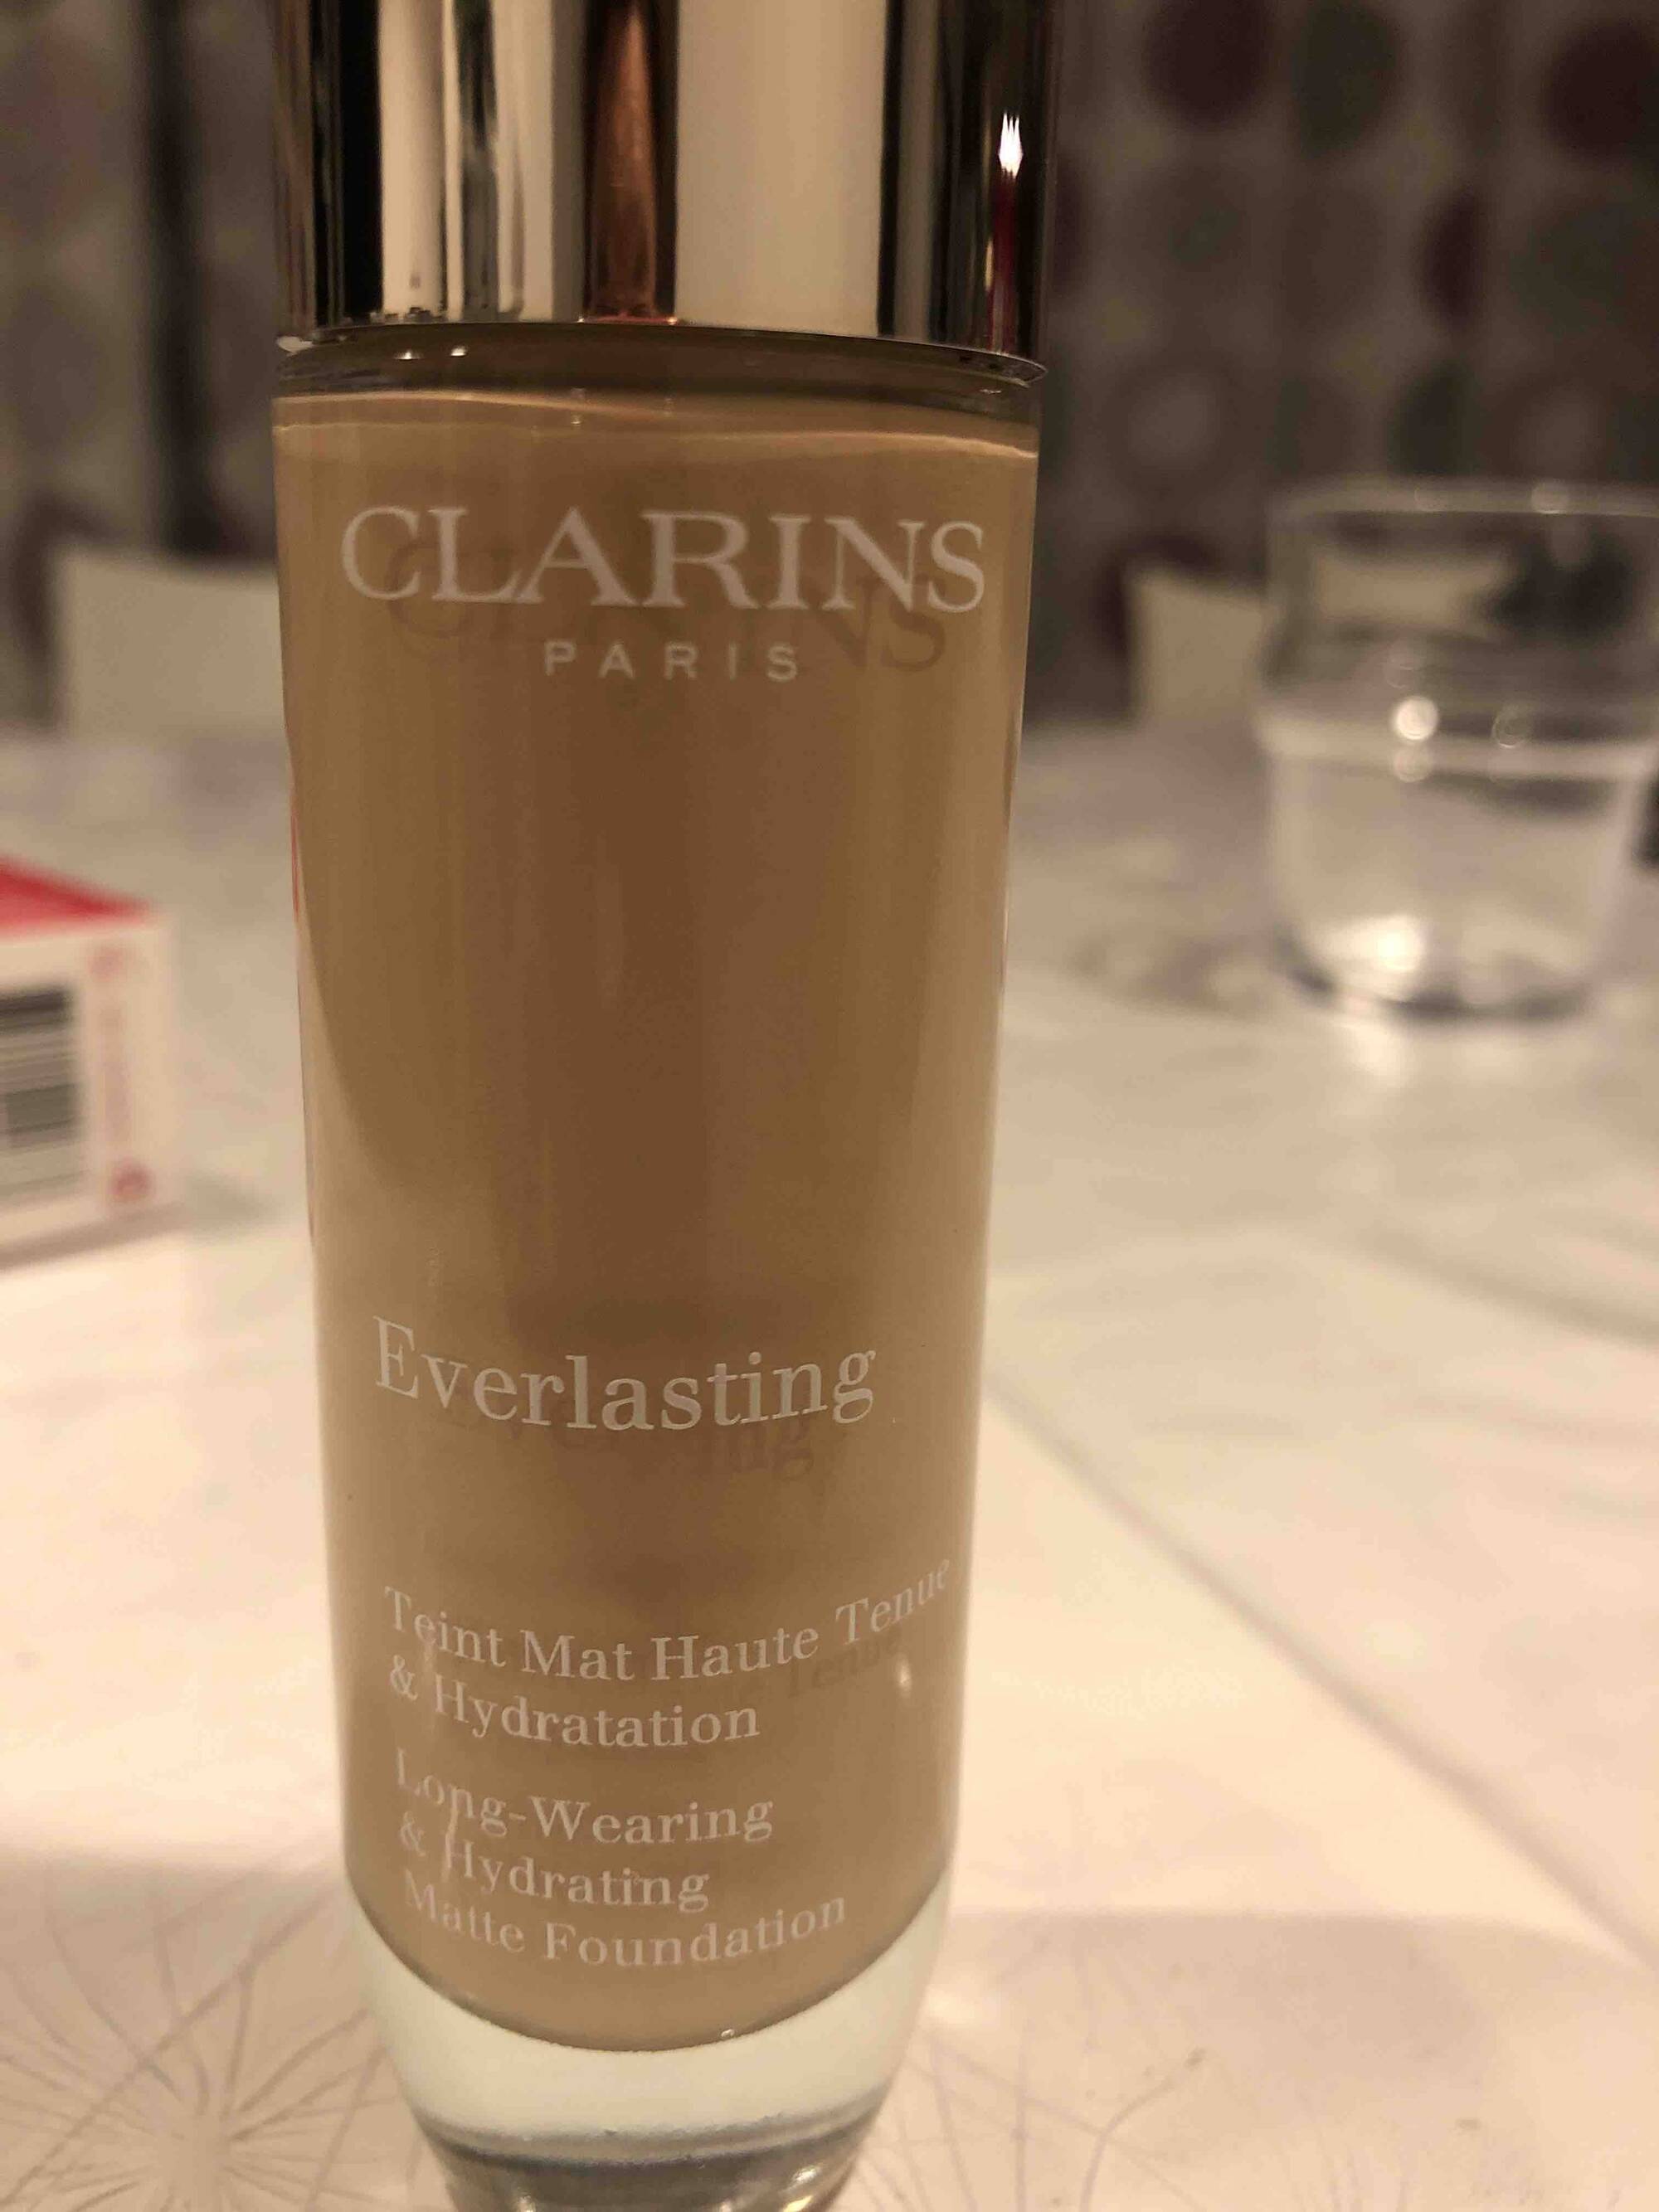 CLARINS - Everlasting - Teint mat haute tenue & hydratation